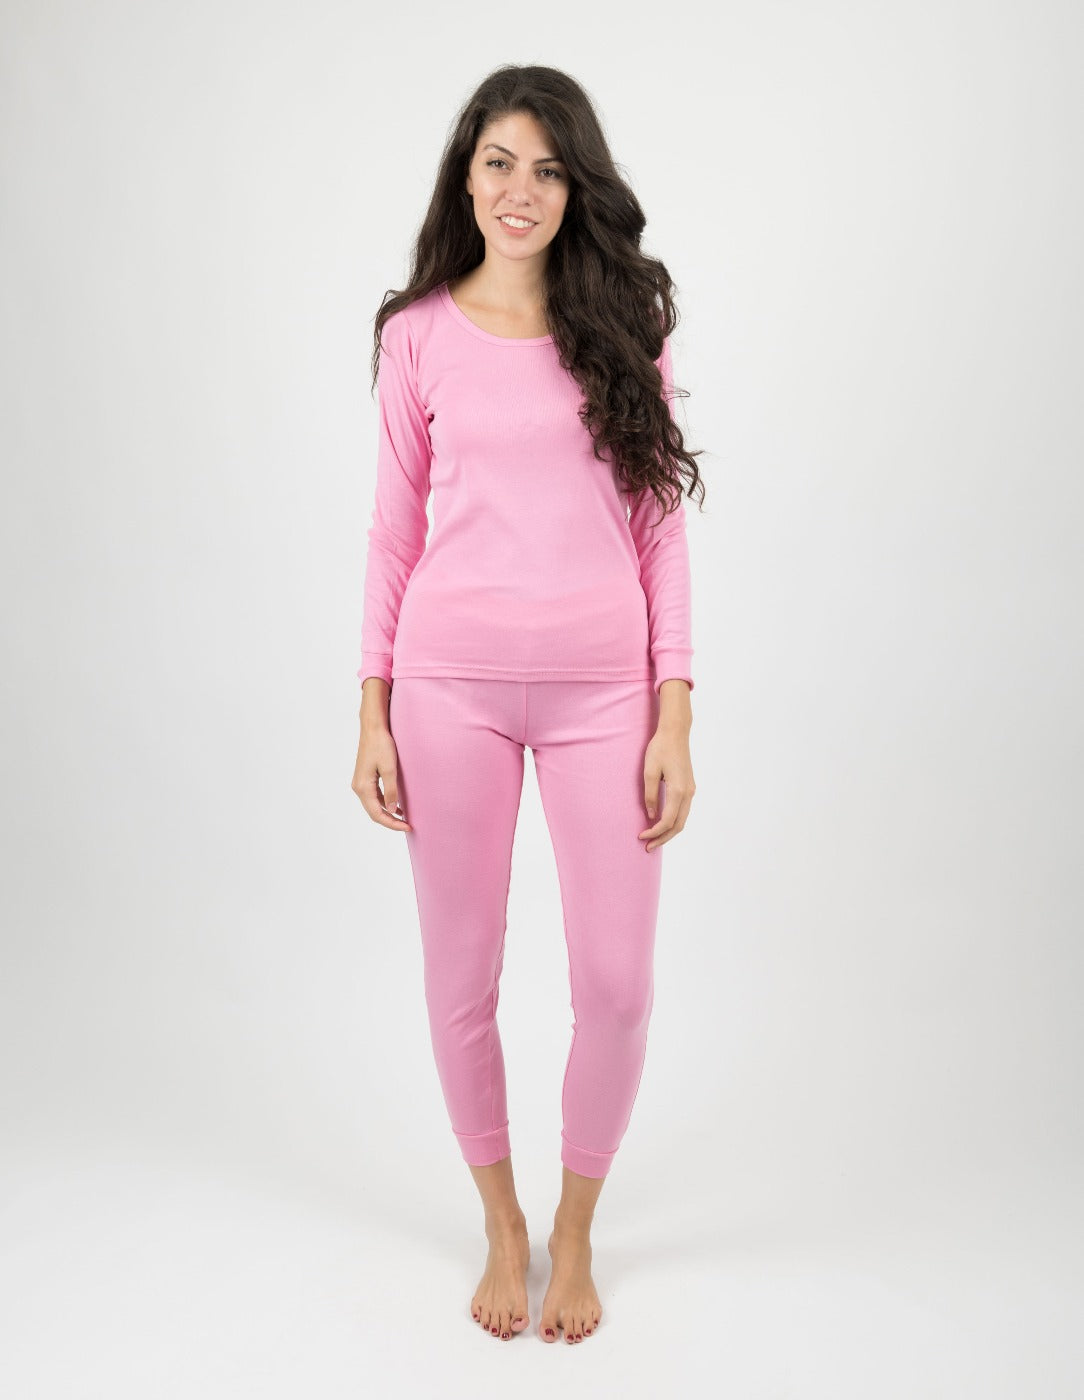 solid color light pink women's cotton pajamas